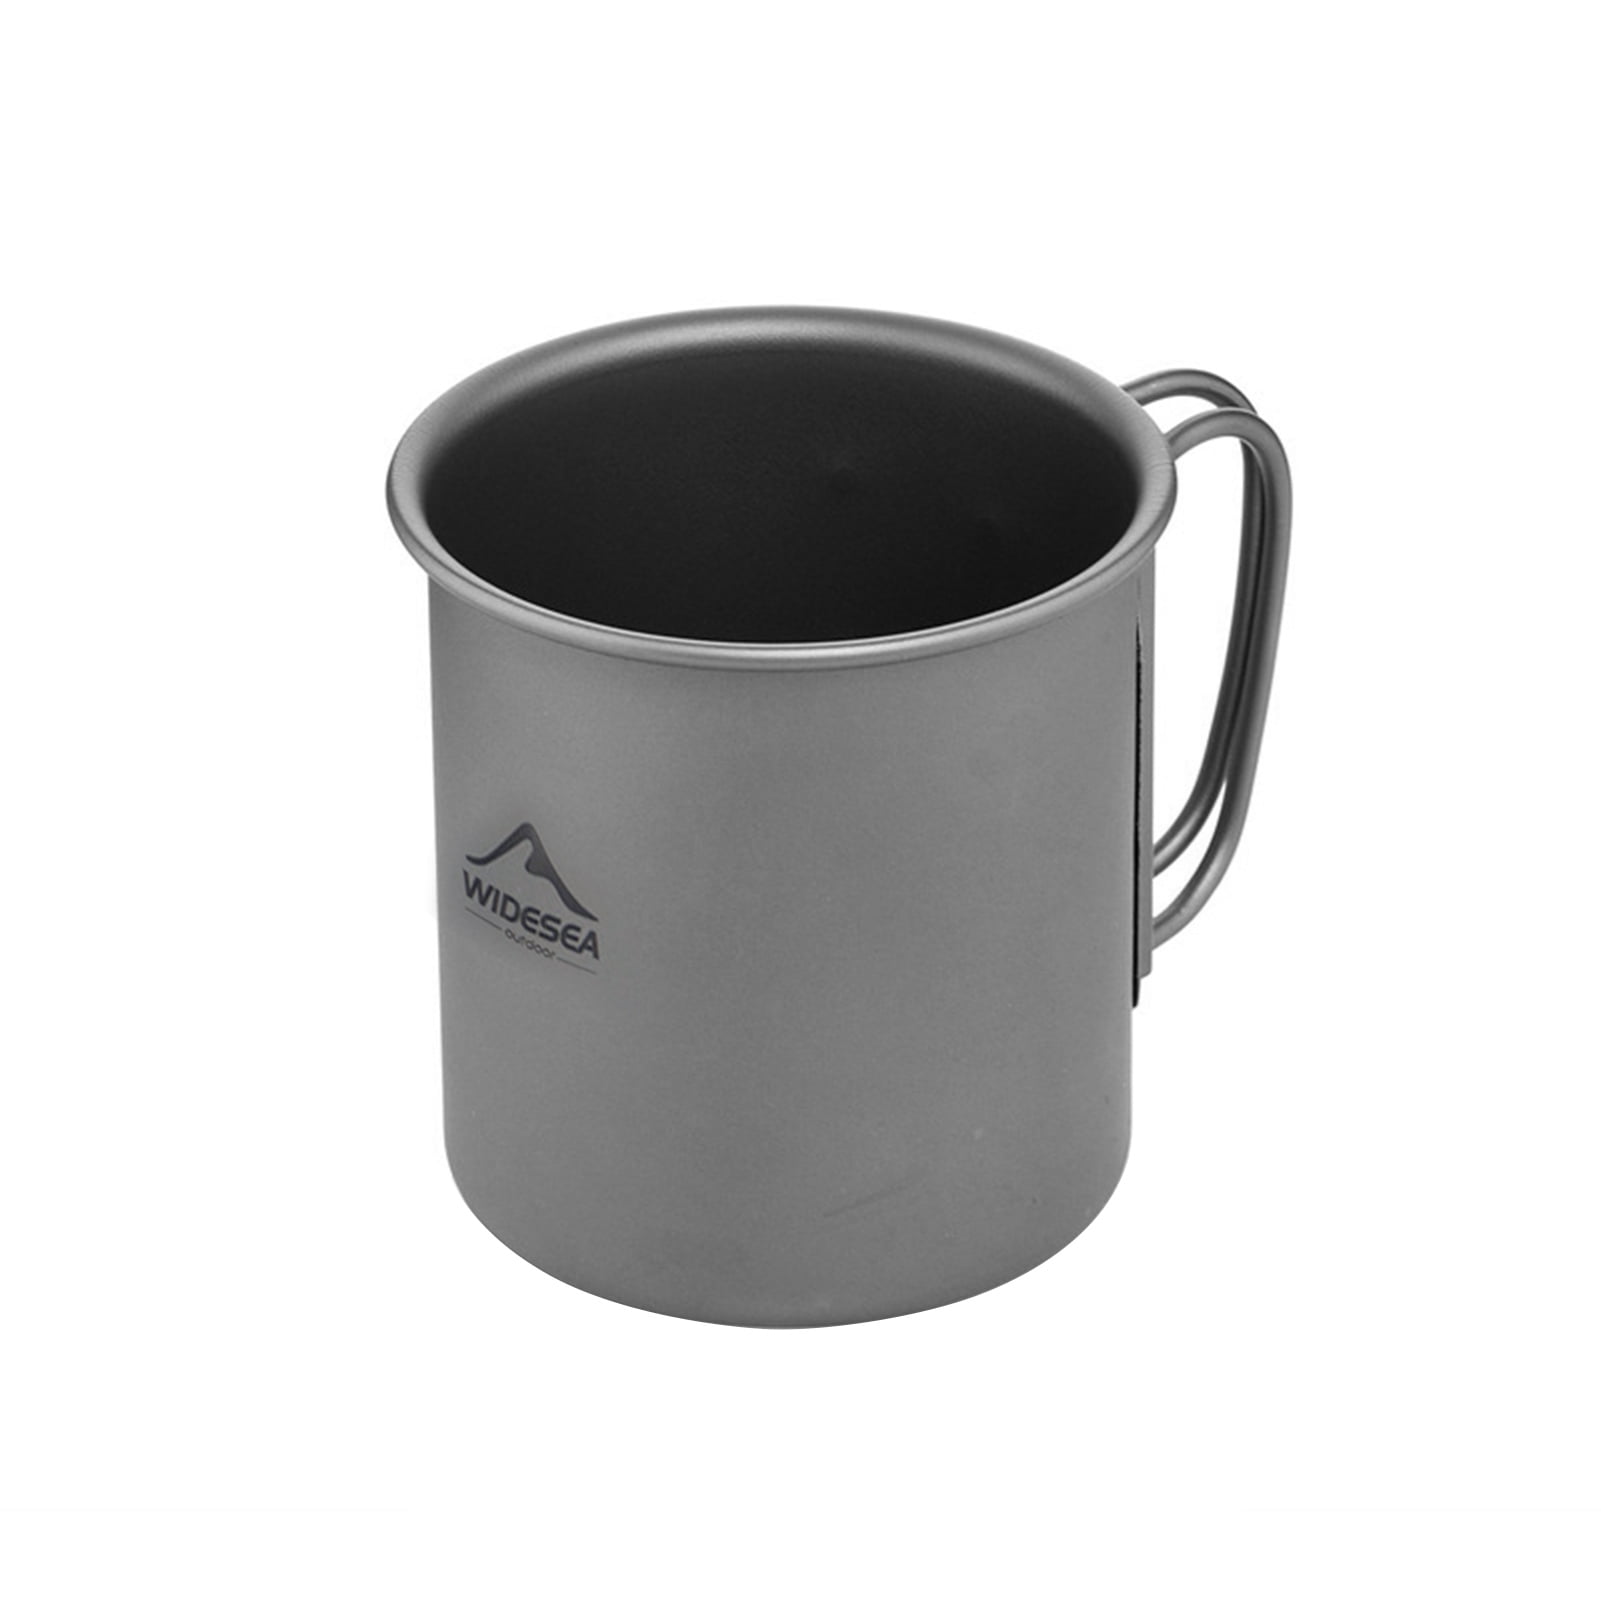 Camping Titanium Alloy Cups Lightweight Water Coffee Tea Mug Outdoor TablewareDD 